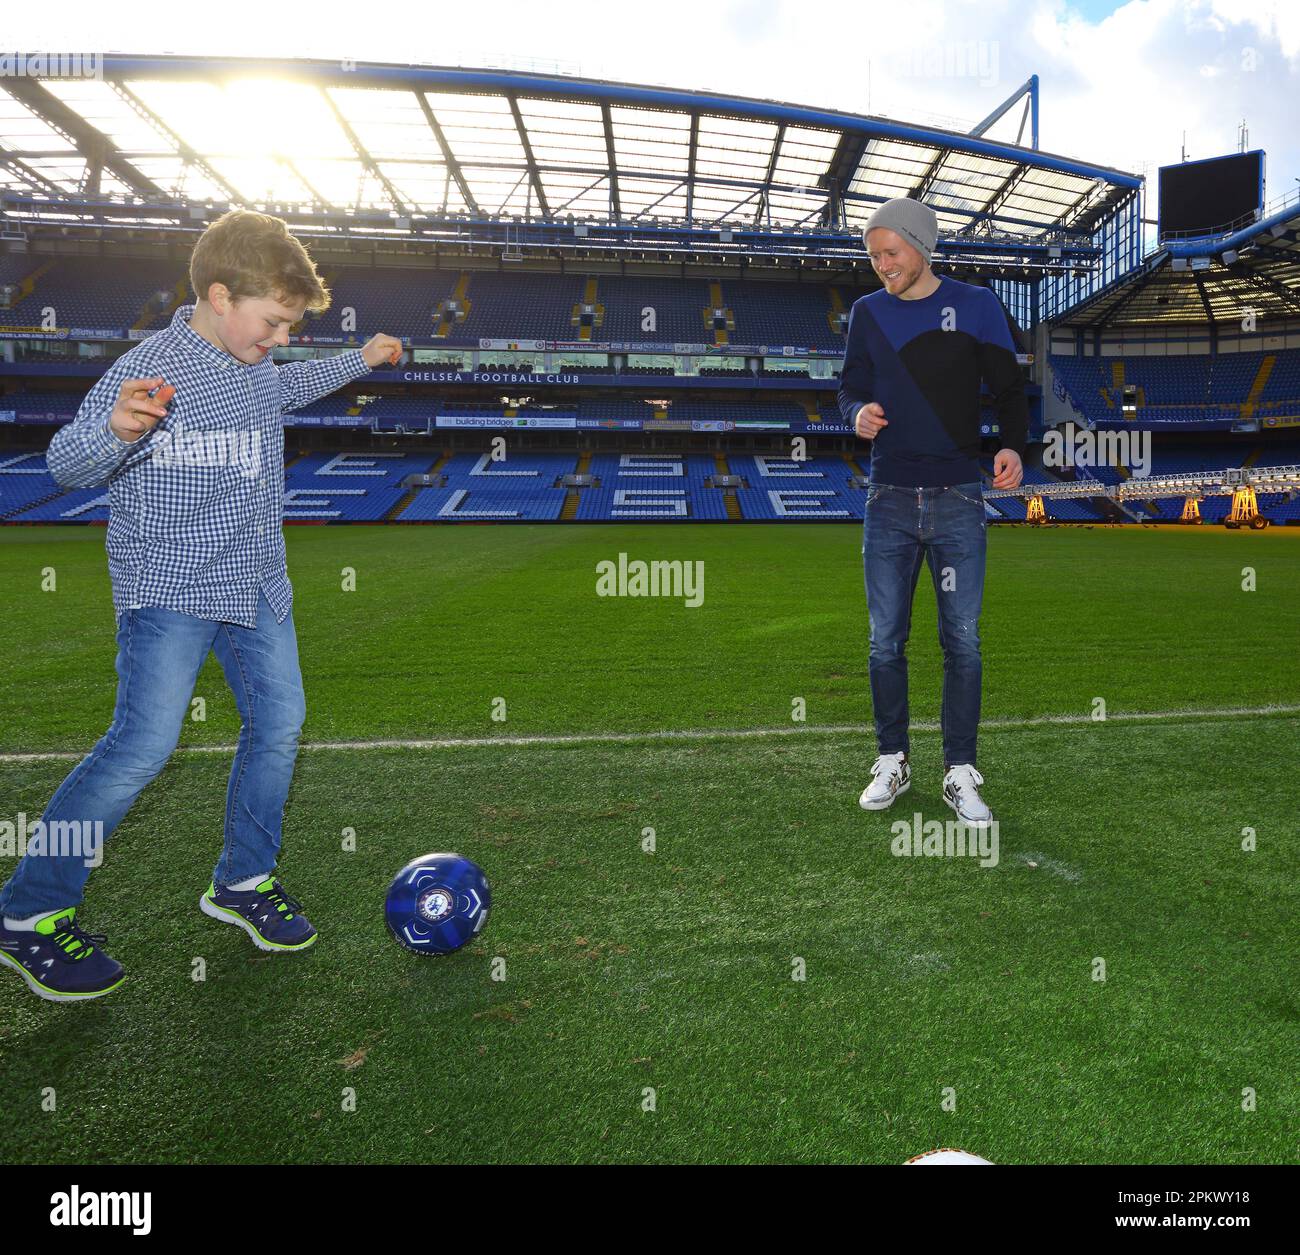 Großbritannien / London / Stamford Bridge / Premier League Club Chelsea / andre Schuerrle Stockfoto